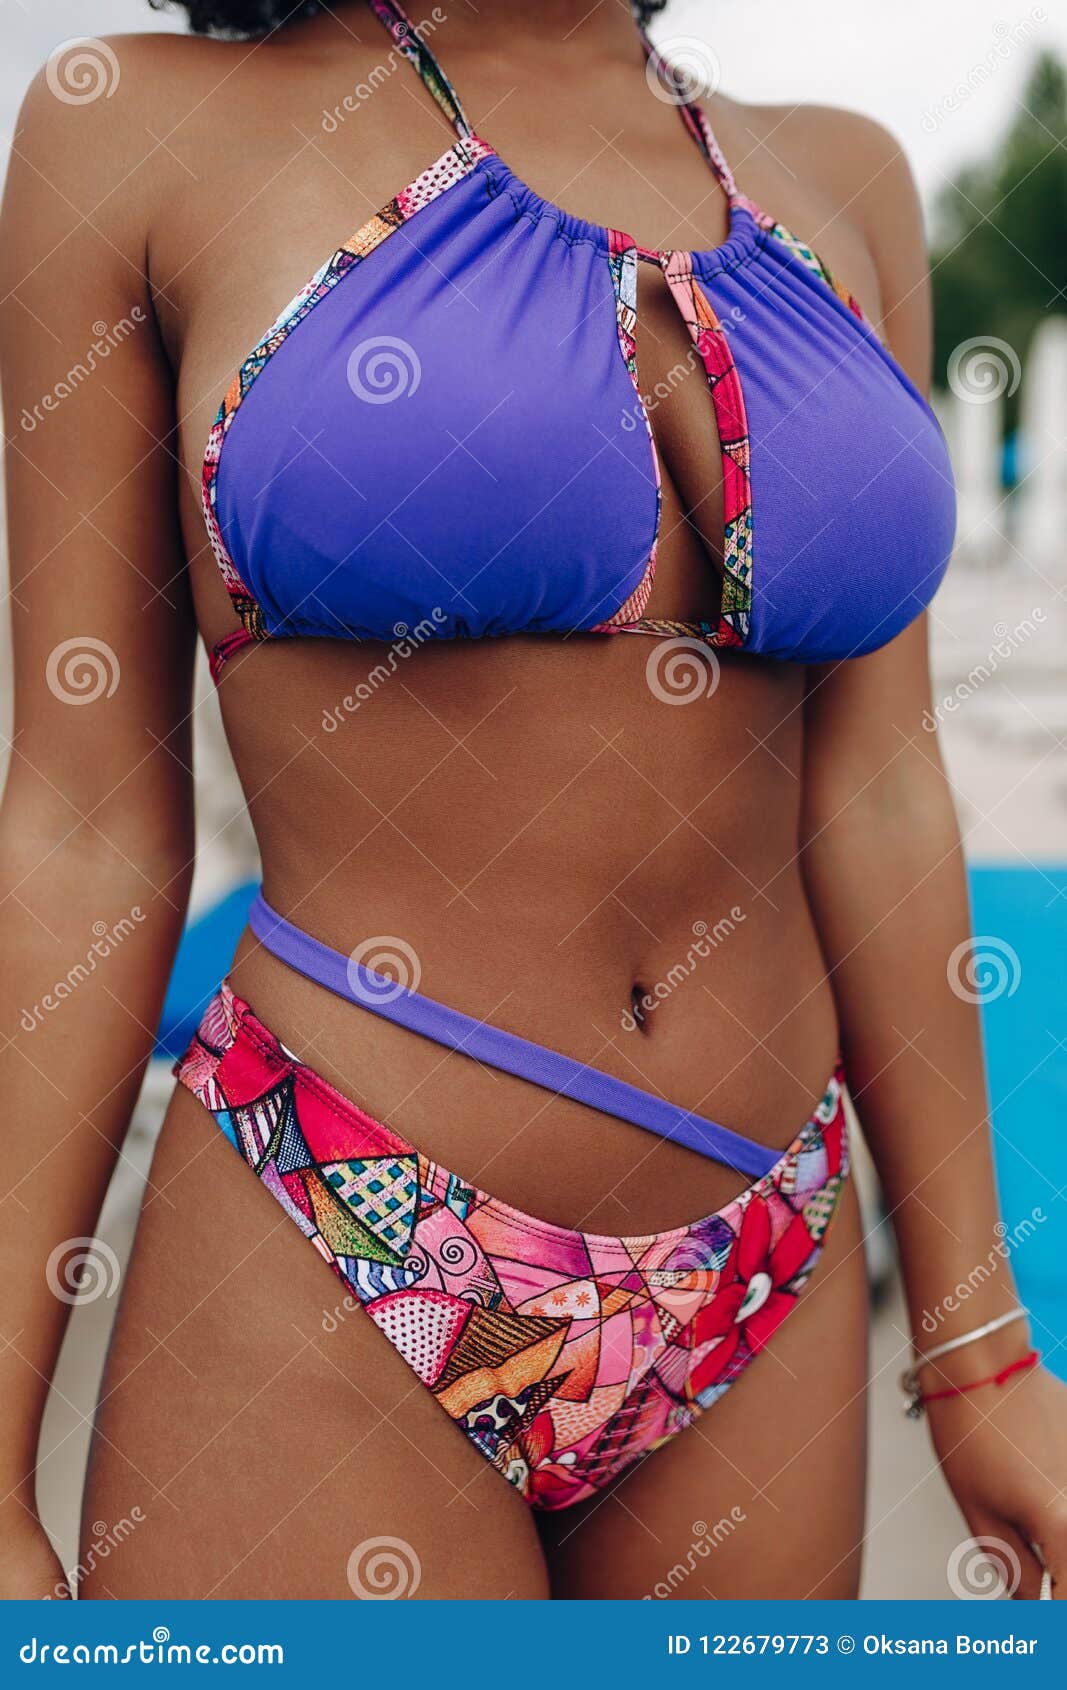 dena davis share big breasts on the beach photos